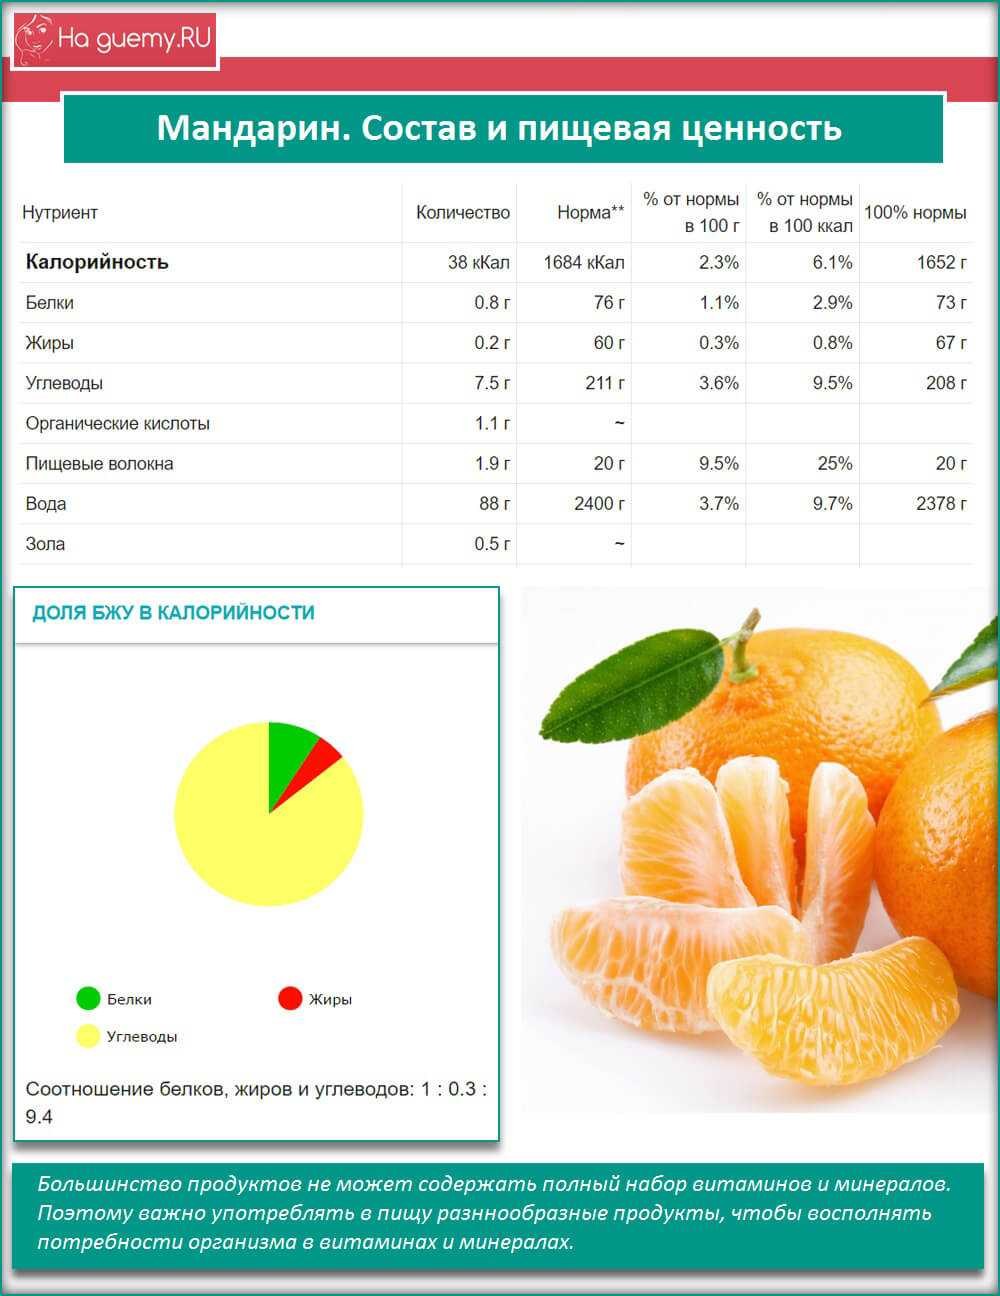 Мандарин белок. Мандарин состав на 100 грамм витамины. Пищевая ценность мандарина в 100 граммах. Мандарин калорийность на 100 грамм. Энергетическая ценность апельсина в 100 граммах.